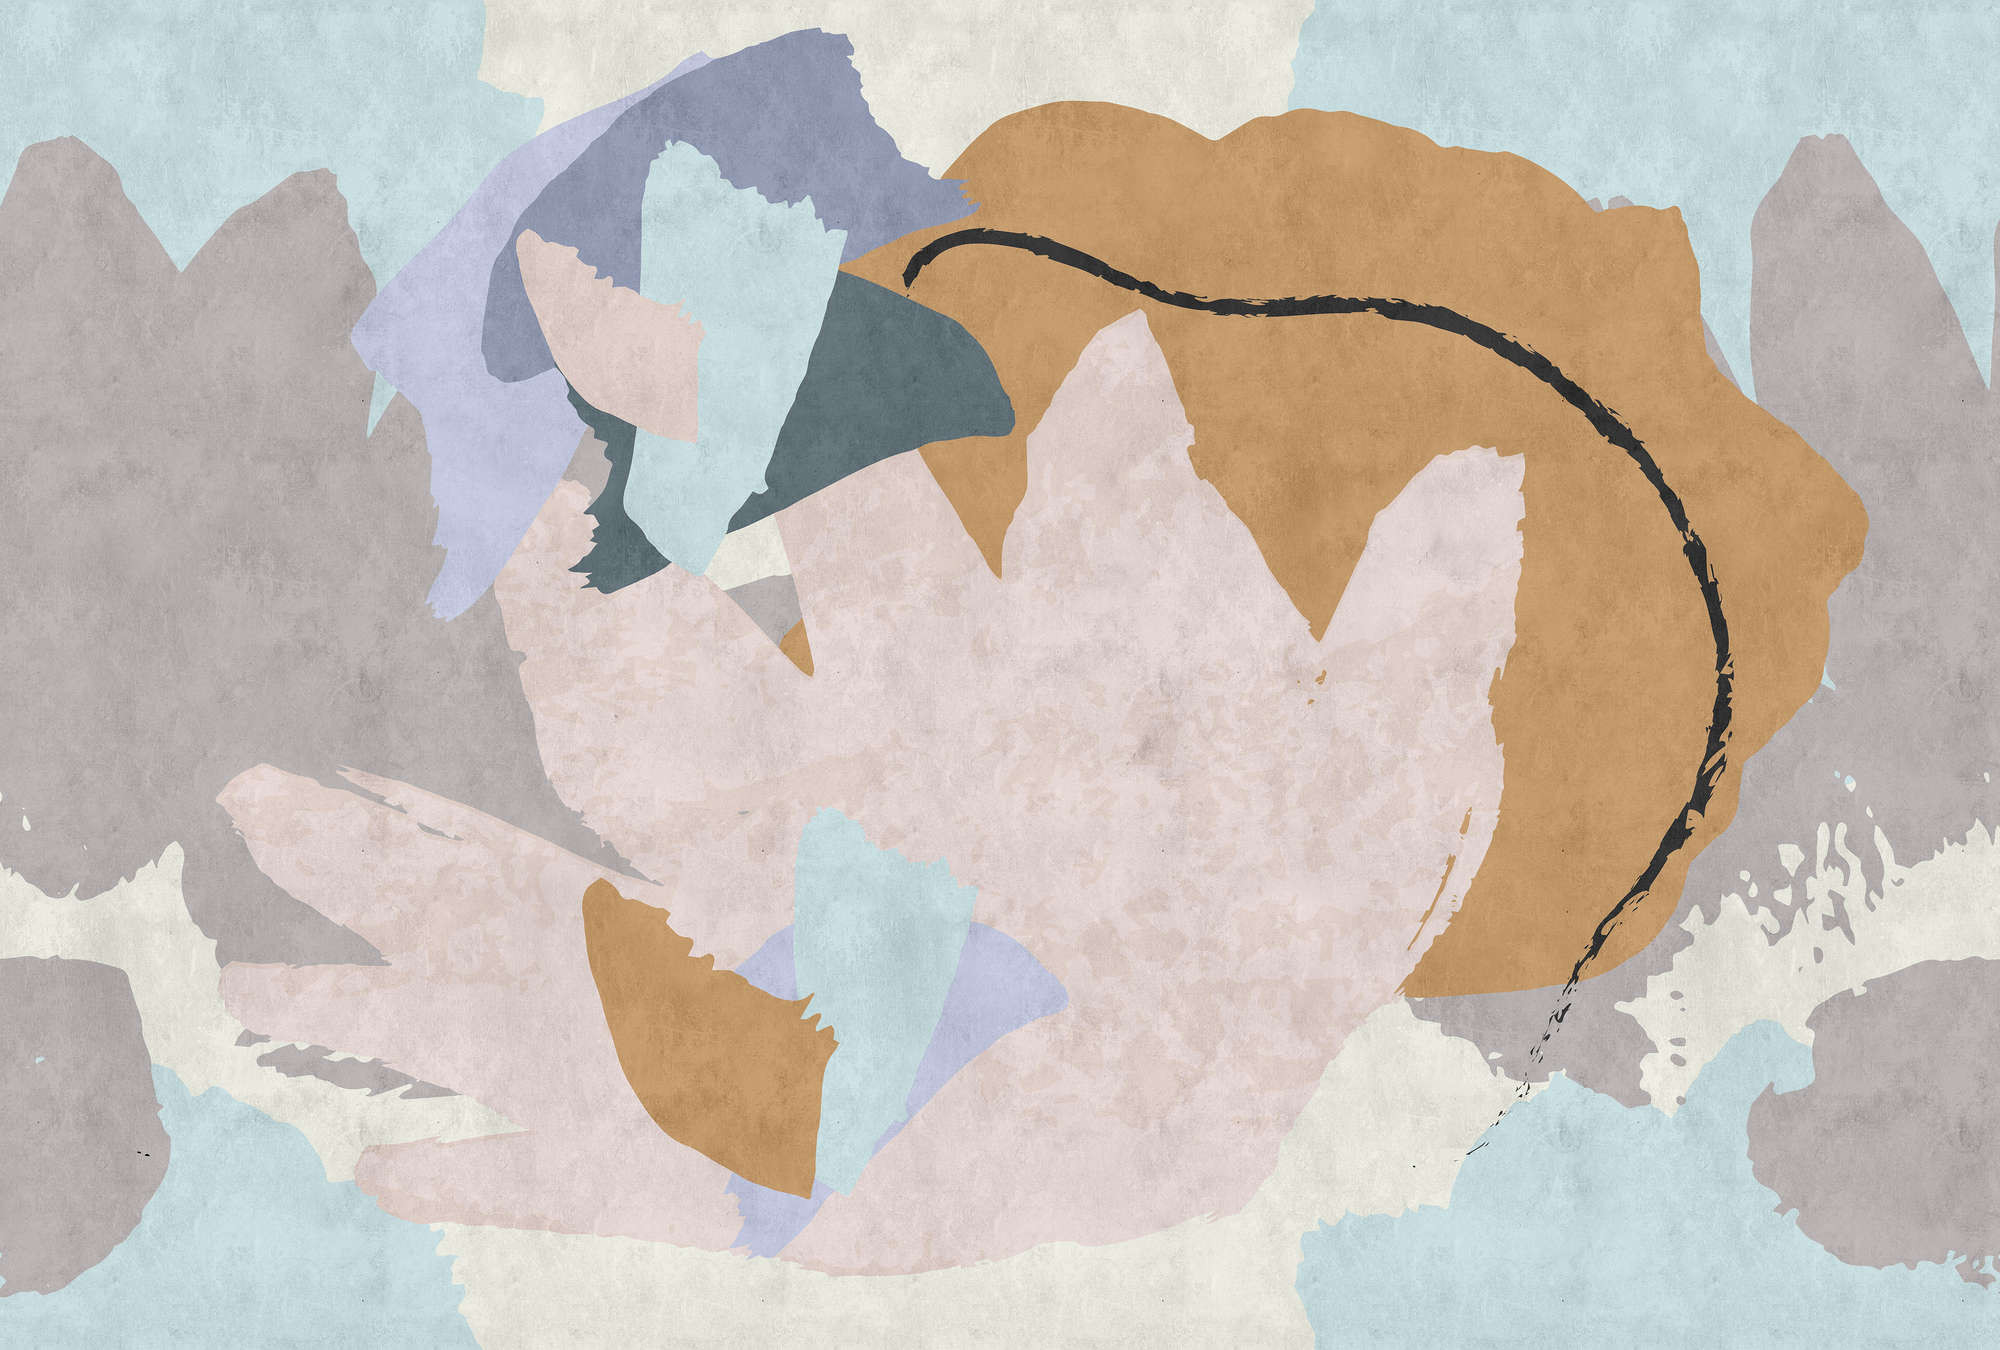             Collage floreale 2 - Carta da parati moderna con texture carta assorbente - Blu, crema | Pile liscio premium
        